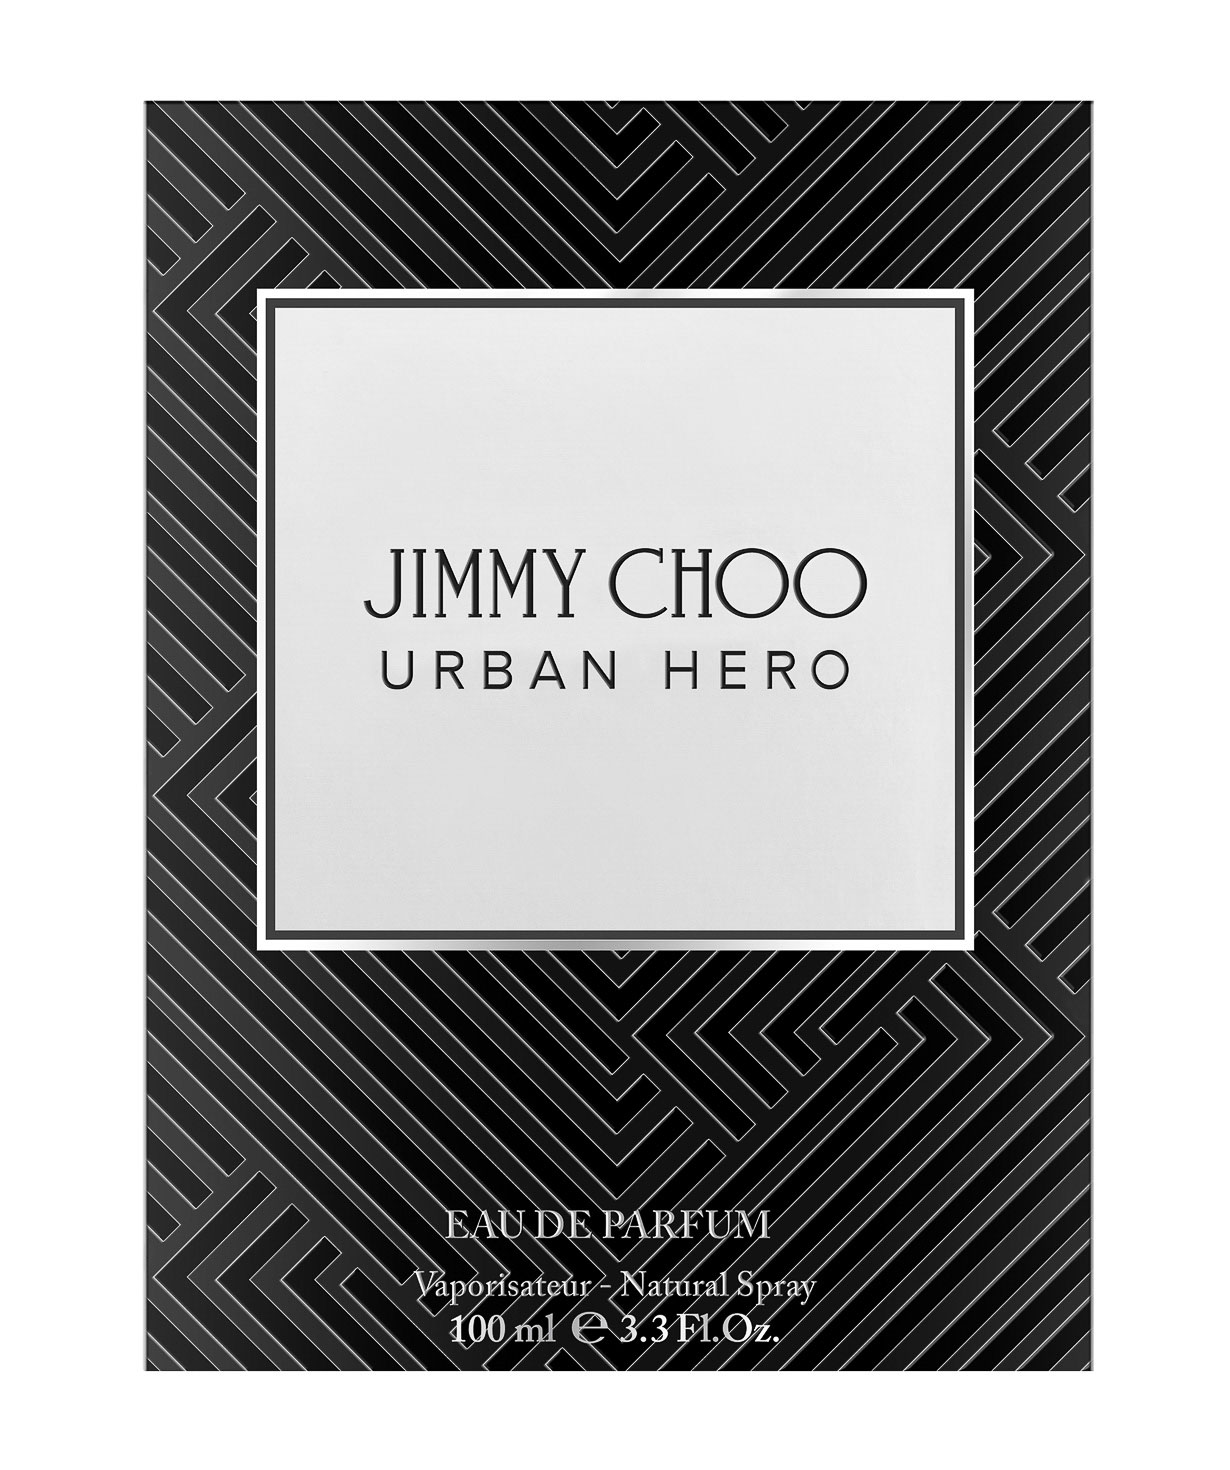 Perfume «Jimmy Choo» Urban Hero, for men, 100 ml